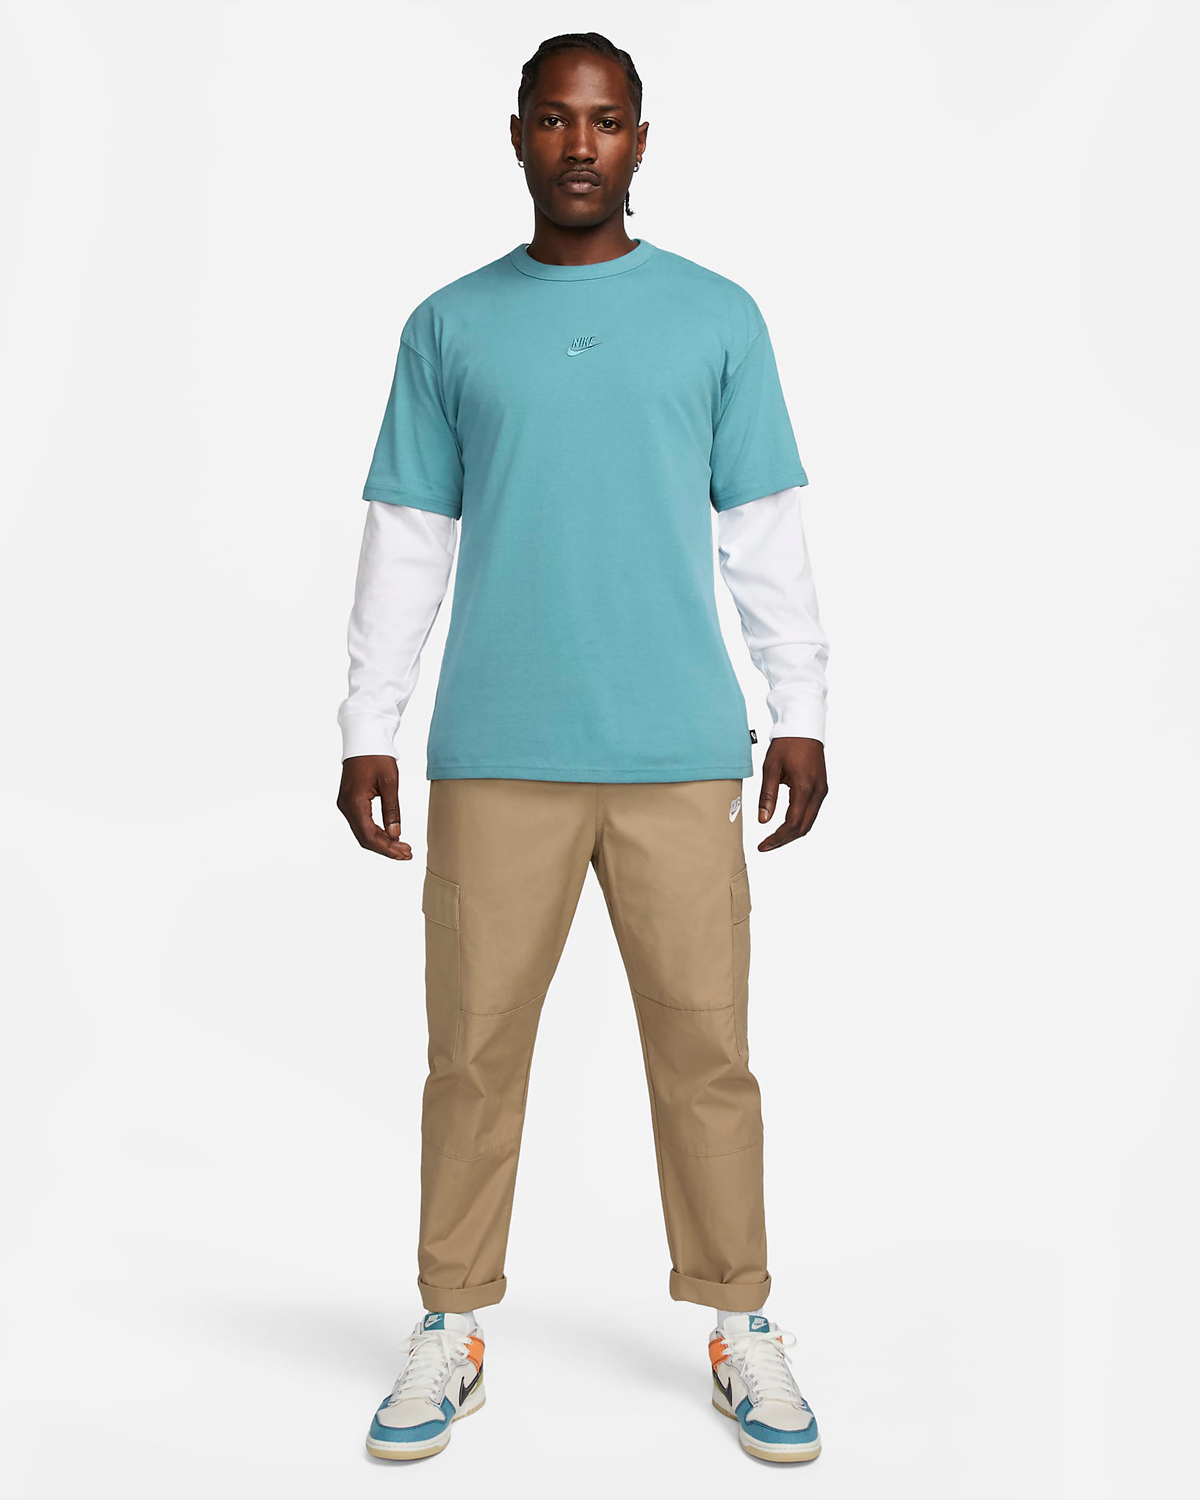 Nike-Sportswear-Premium-Essentials-T-Shirt-Noise-Aqua-Outfit